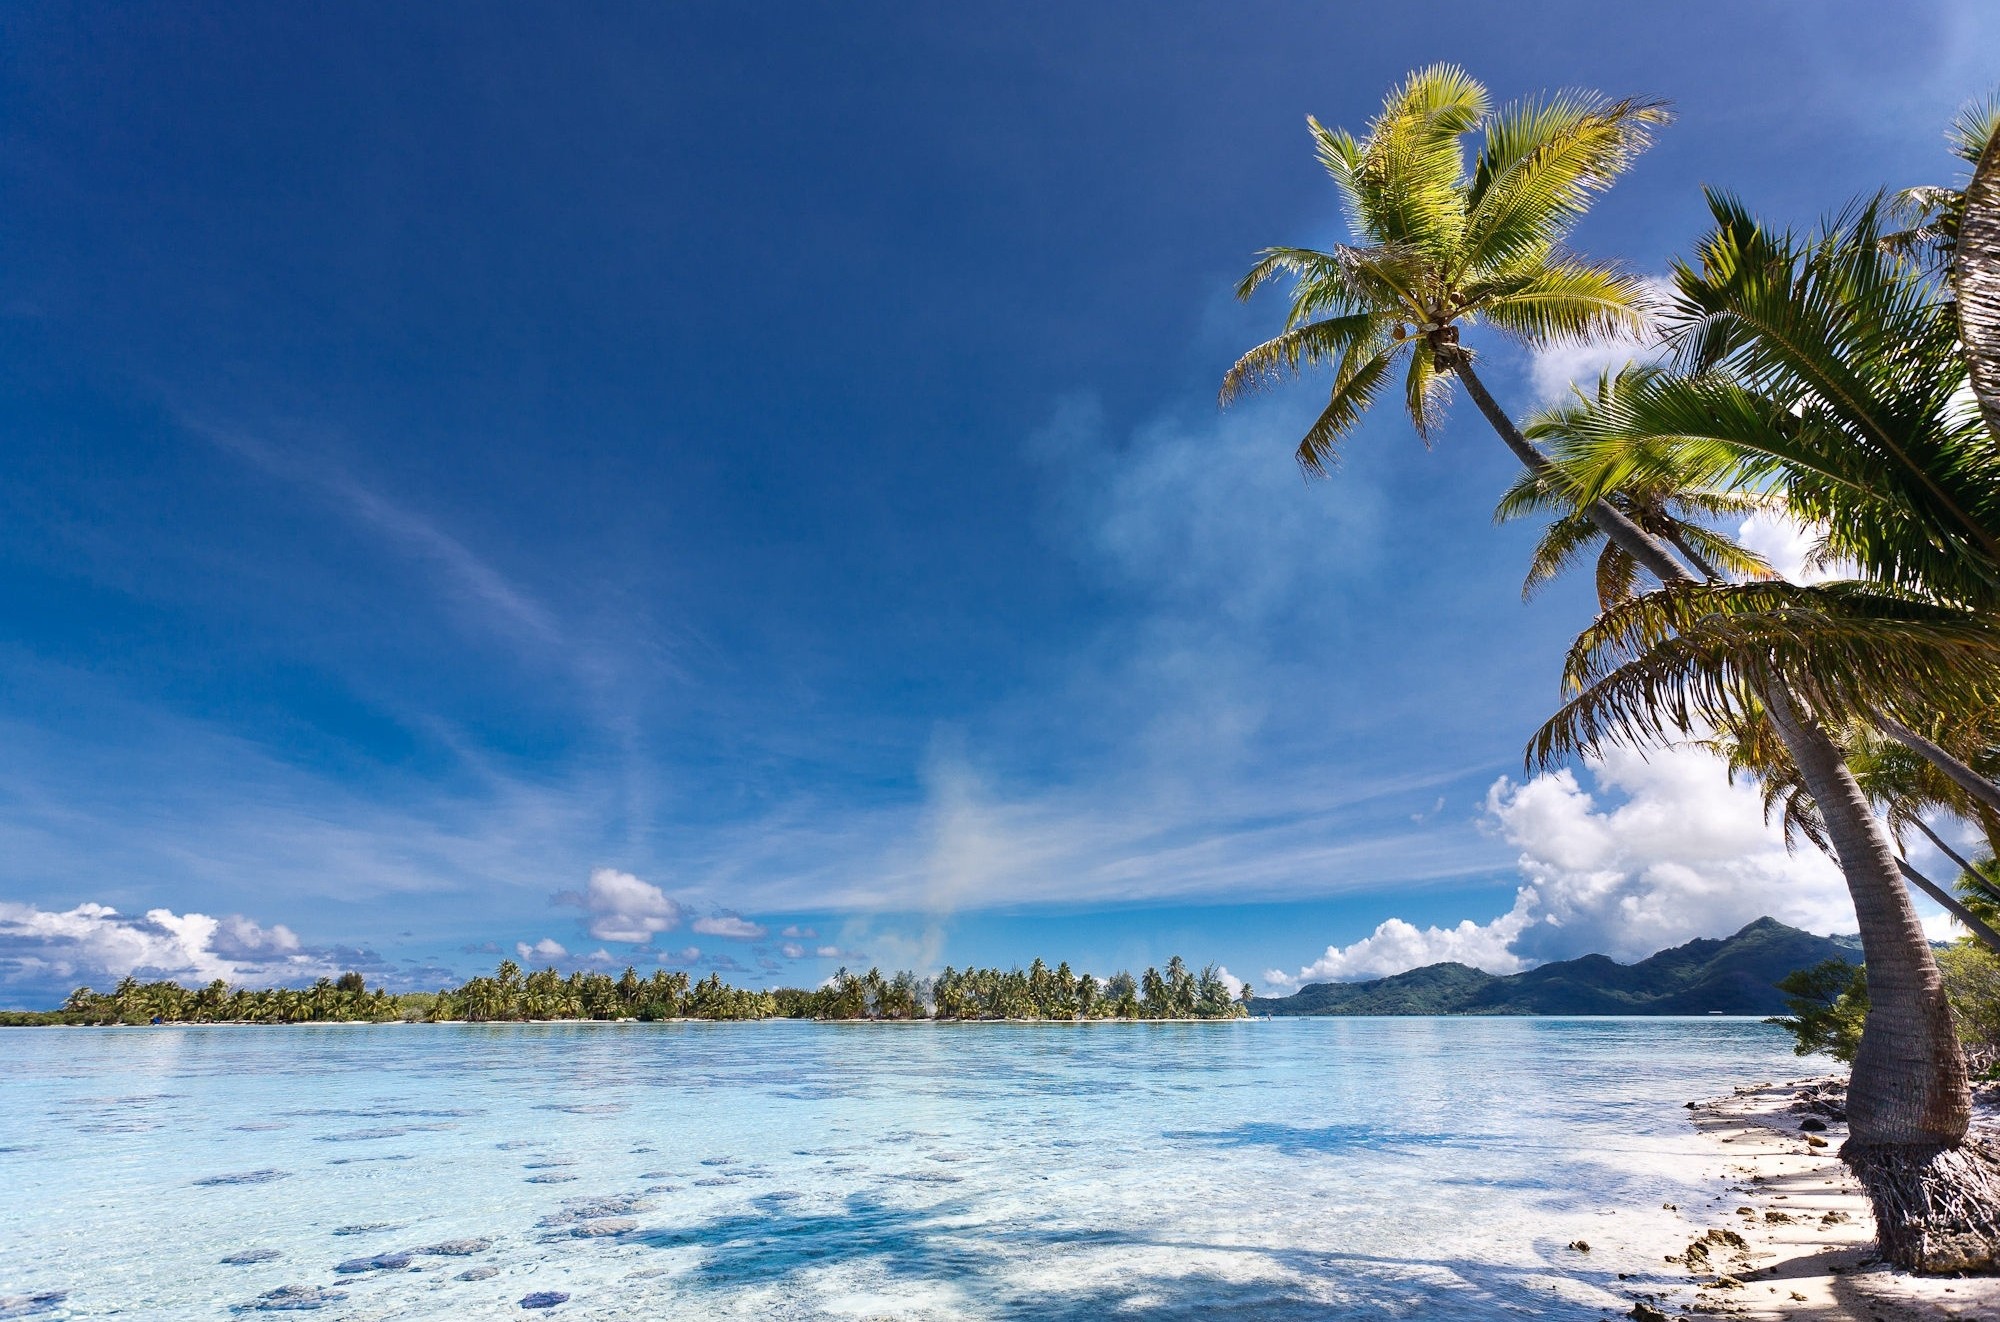 Landscape Nature Beach Palm Trees Island Sea Tropical Eden Mountains Summer French Polynesia 2000x1322